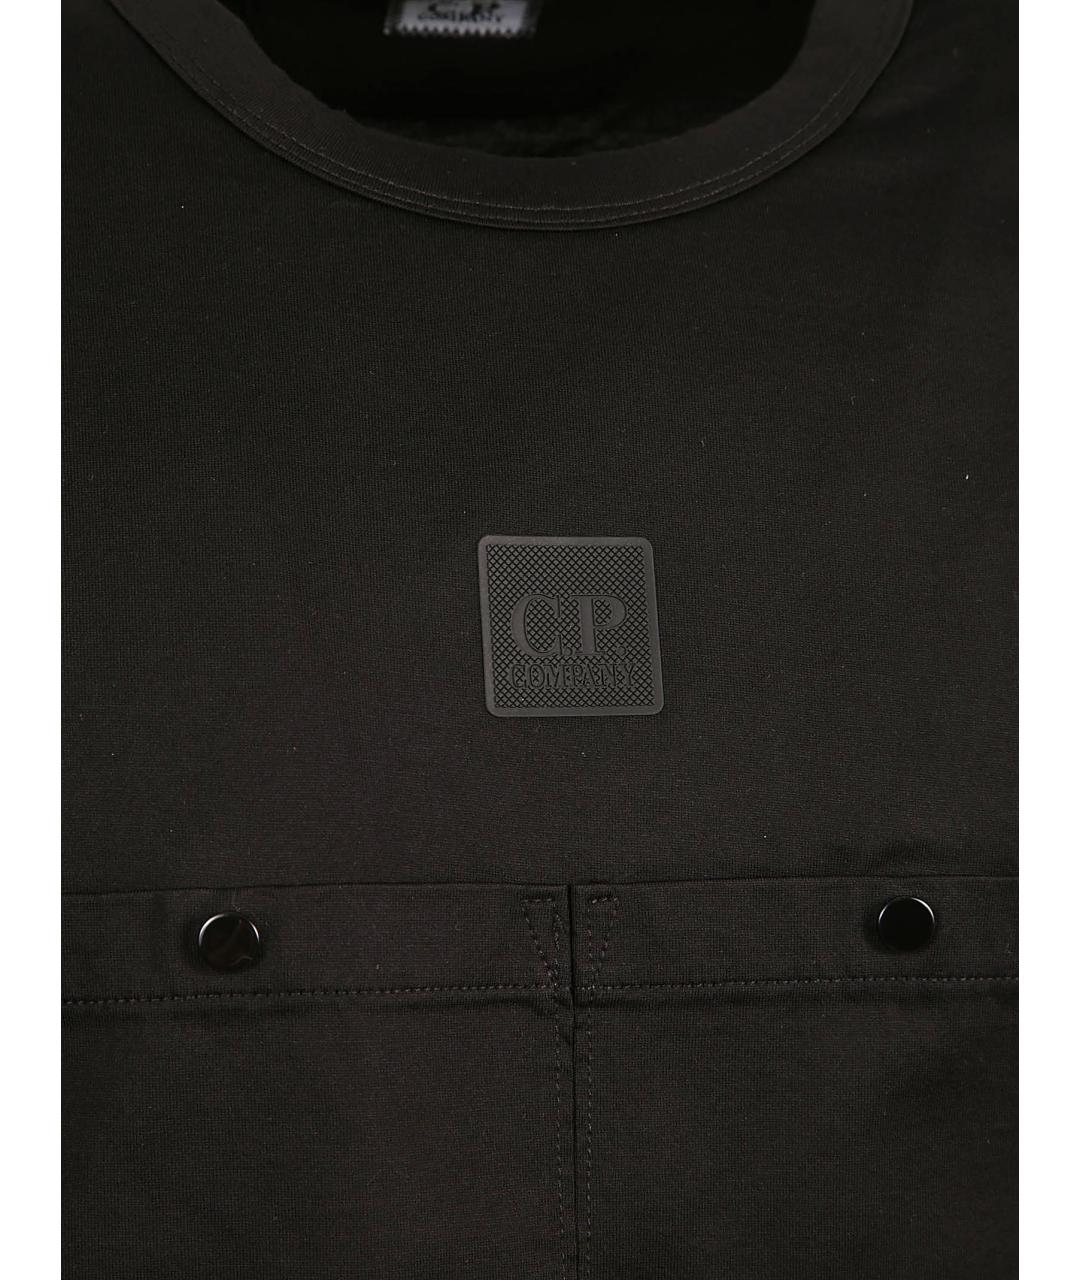 CP COMPANY Черная хлопковая футболка, фото 2